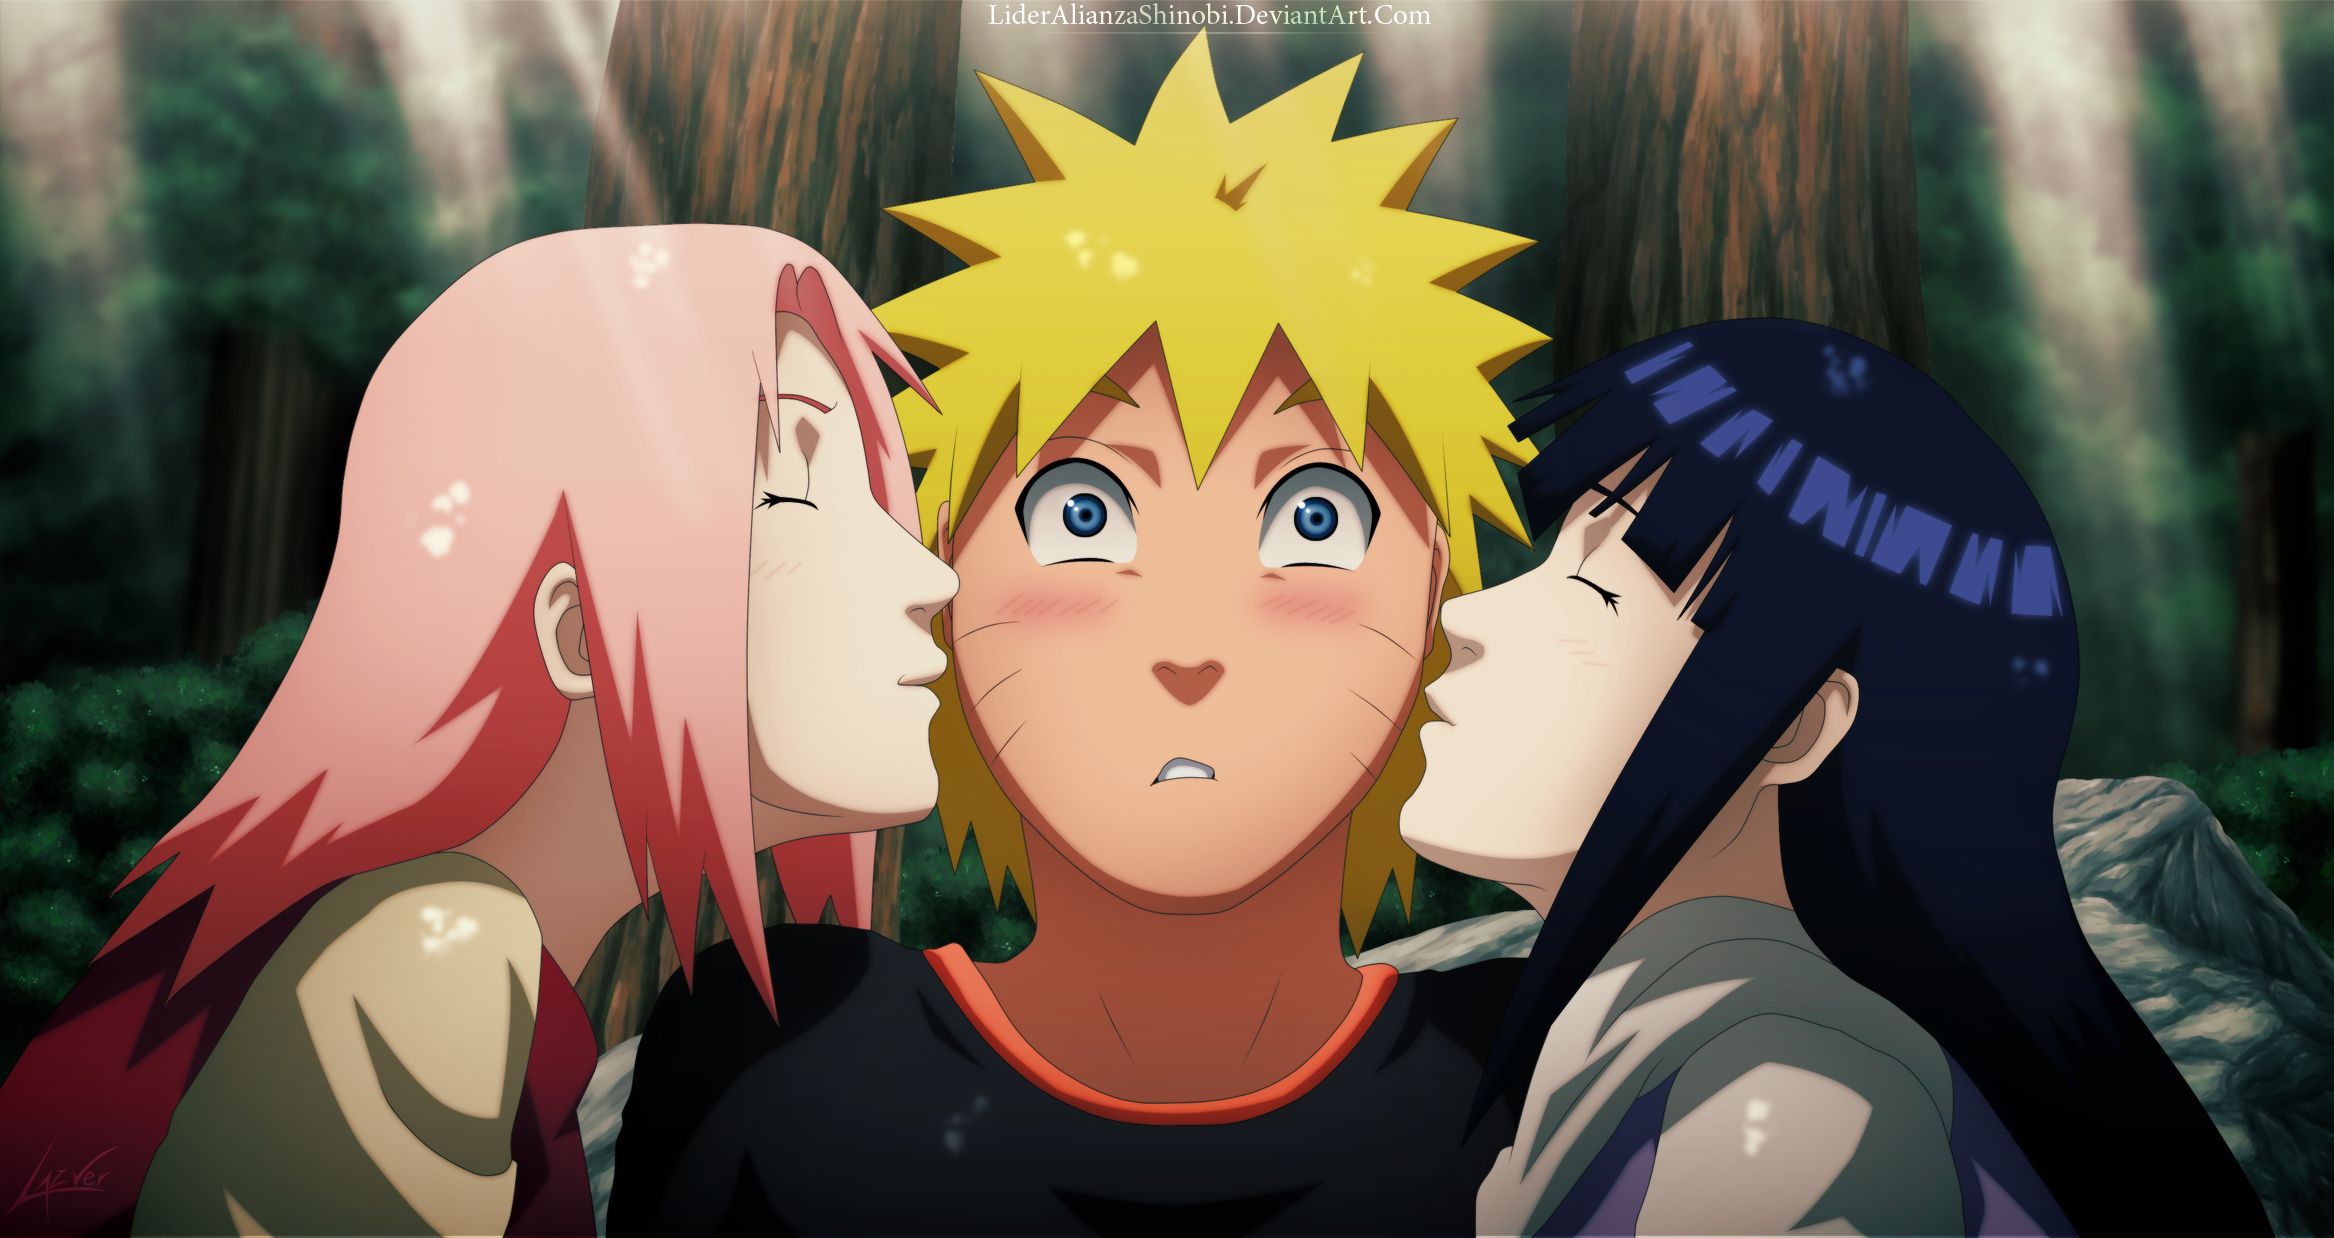 Baixe gratuitamente a imagem Anime, Naruto, Hinata Hyuuga, Sakura Haruno, Naruto Uzumaki na área de trabalho do seu PC